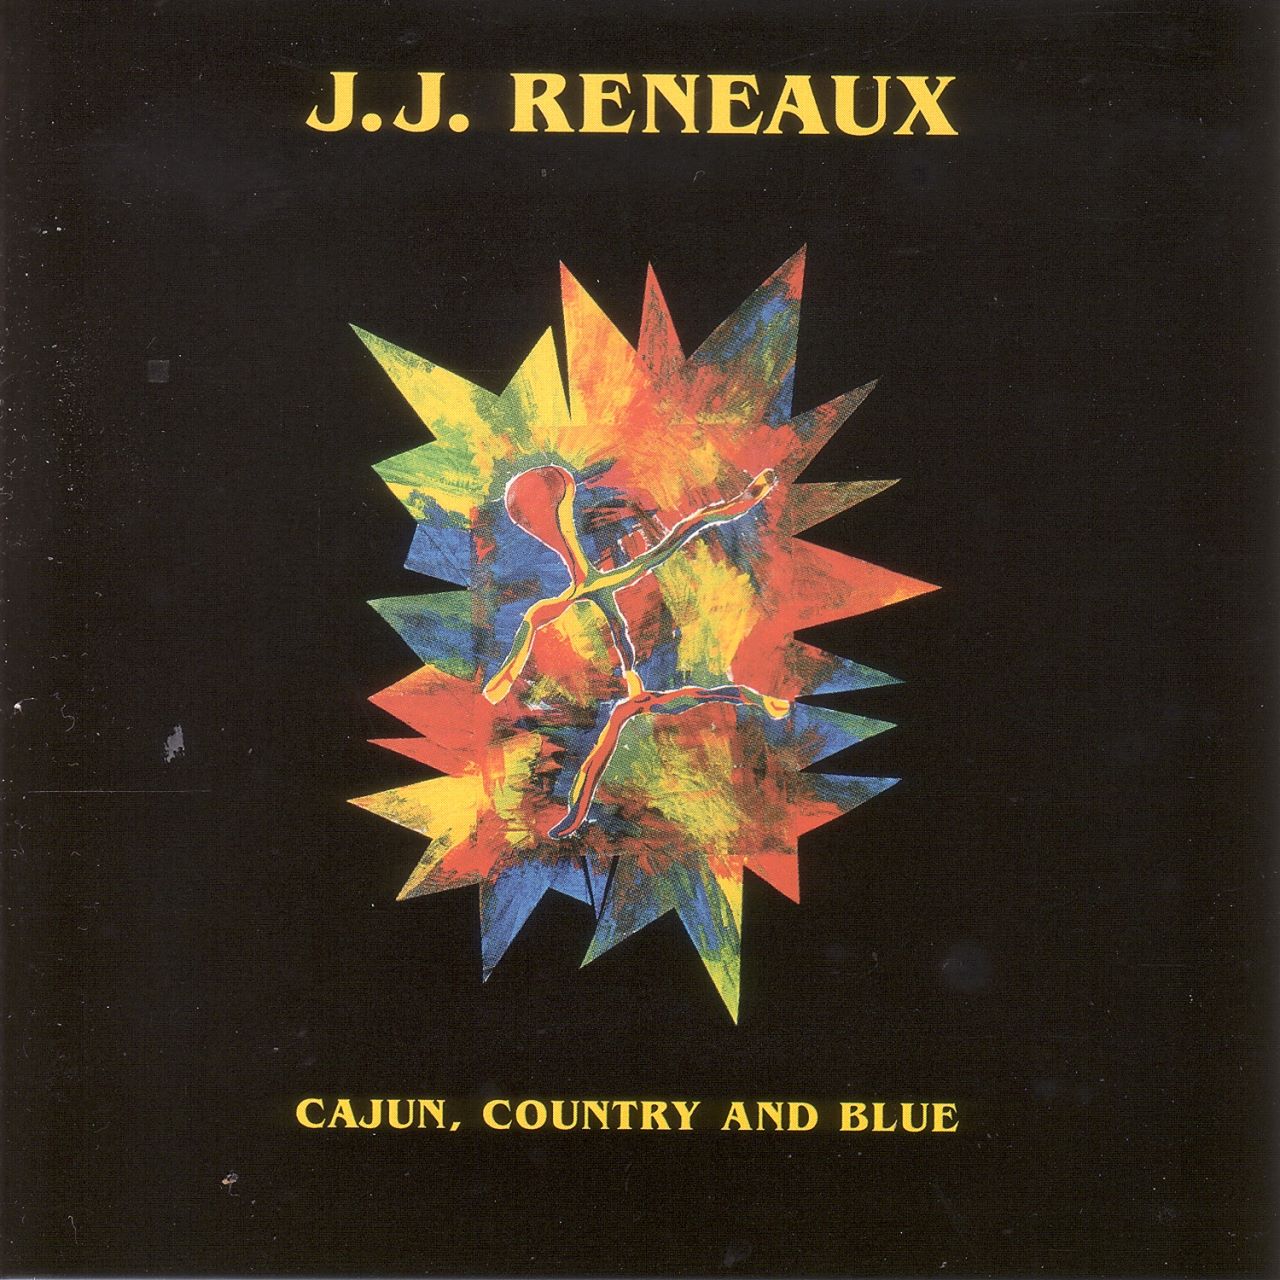 J.J. Reneaux - Cajun, Country And Blue cover album